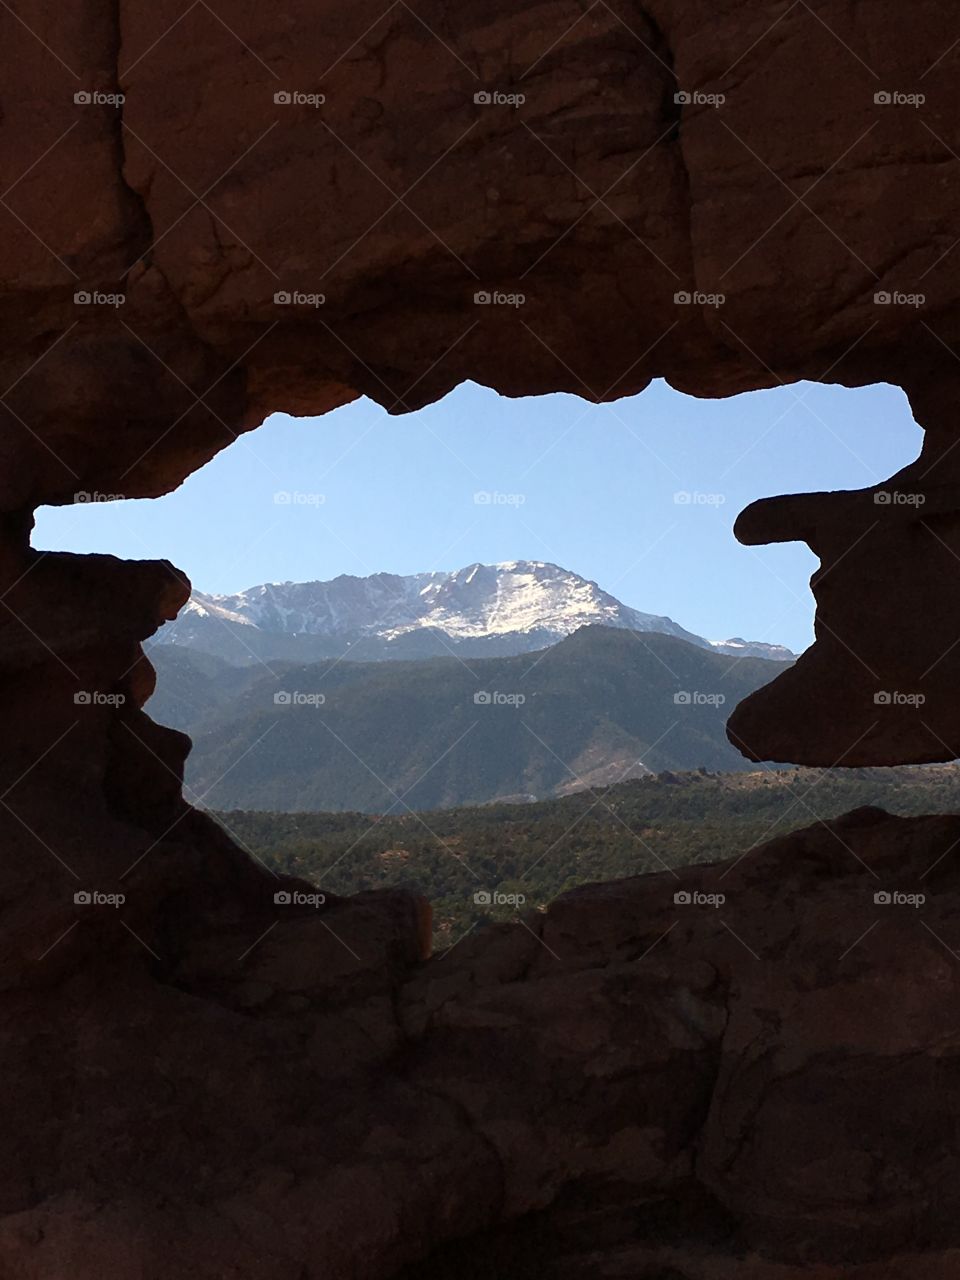 Looking through the rock window 